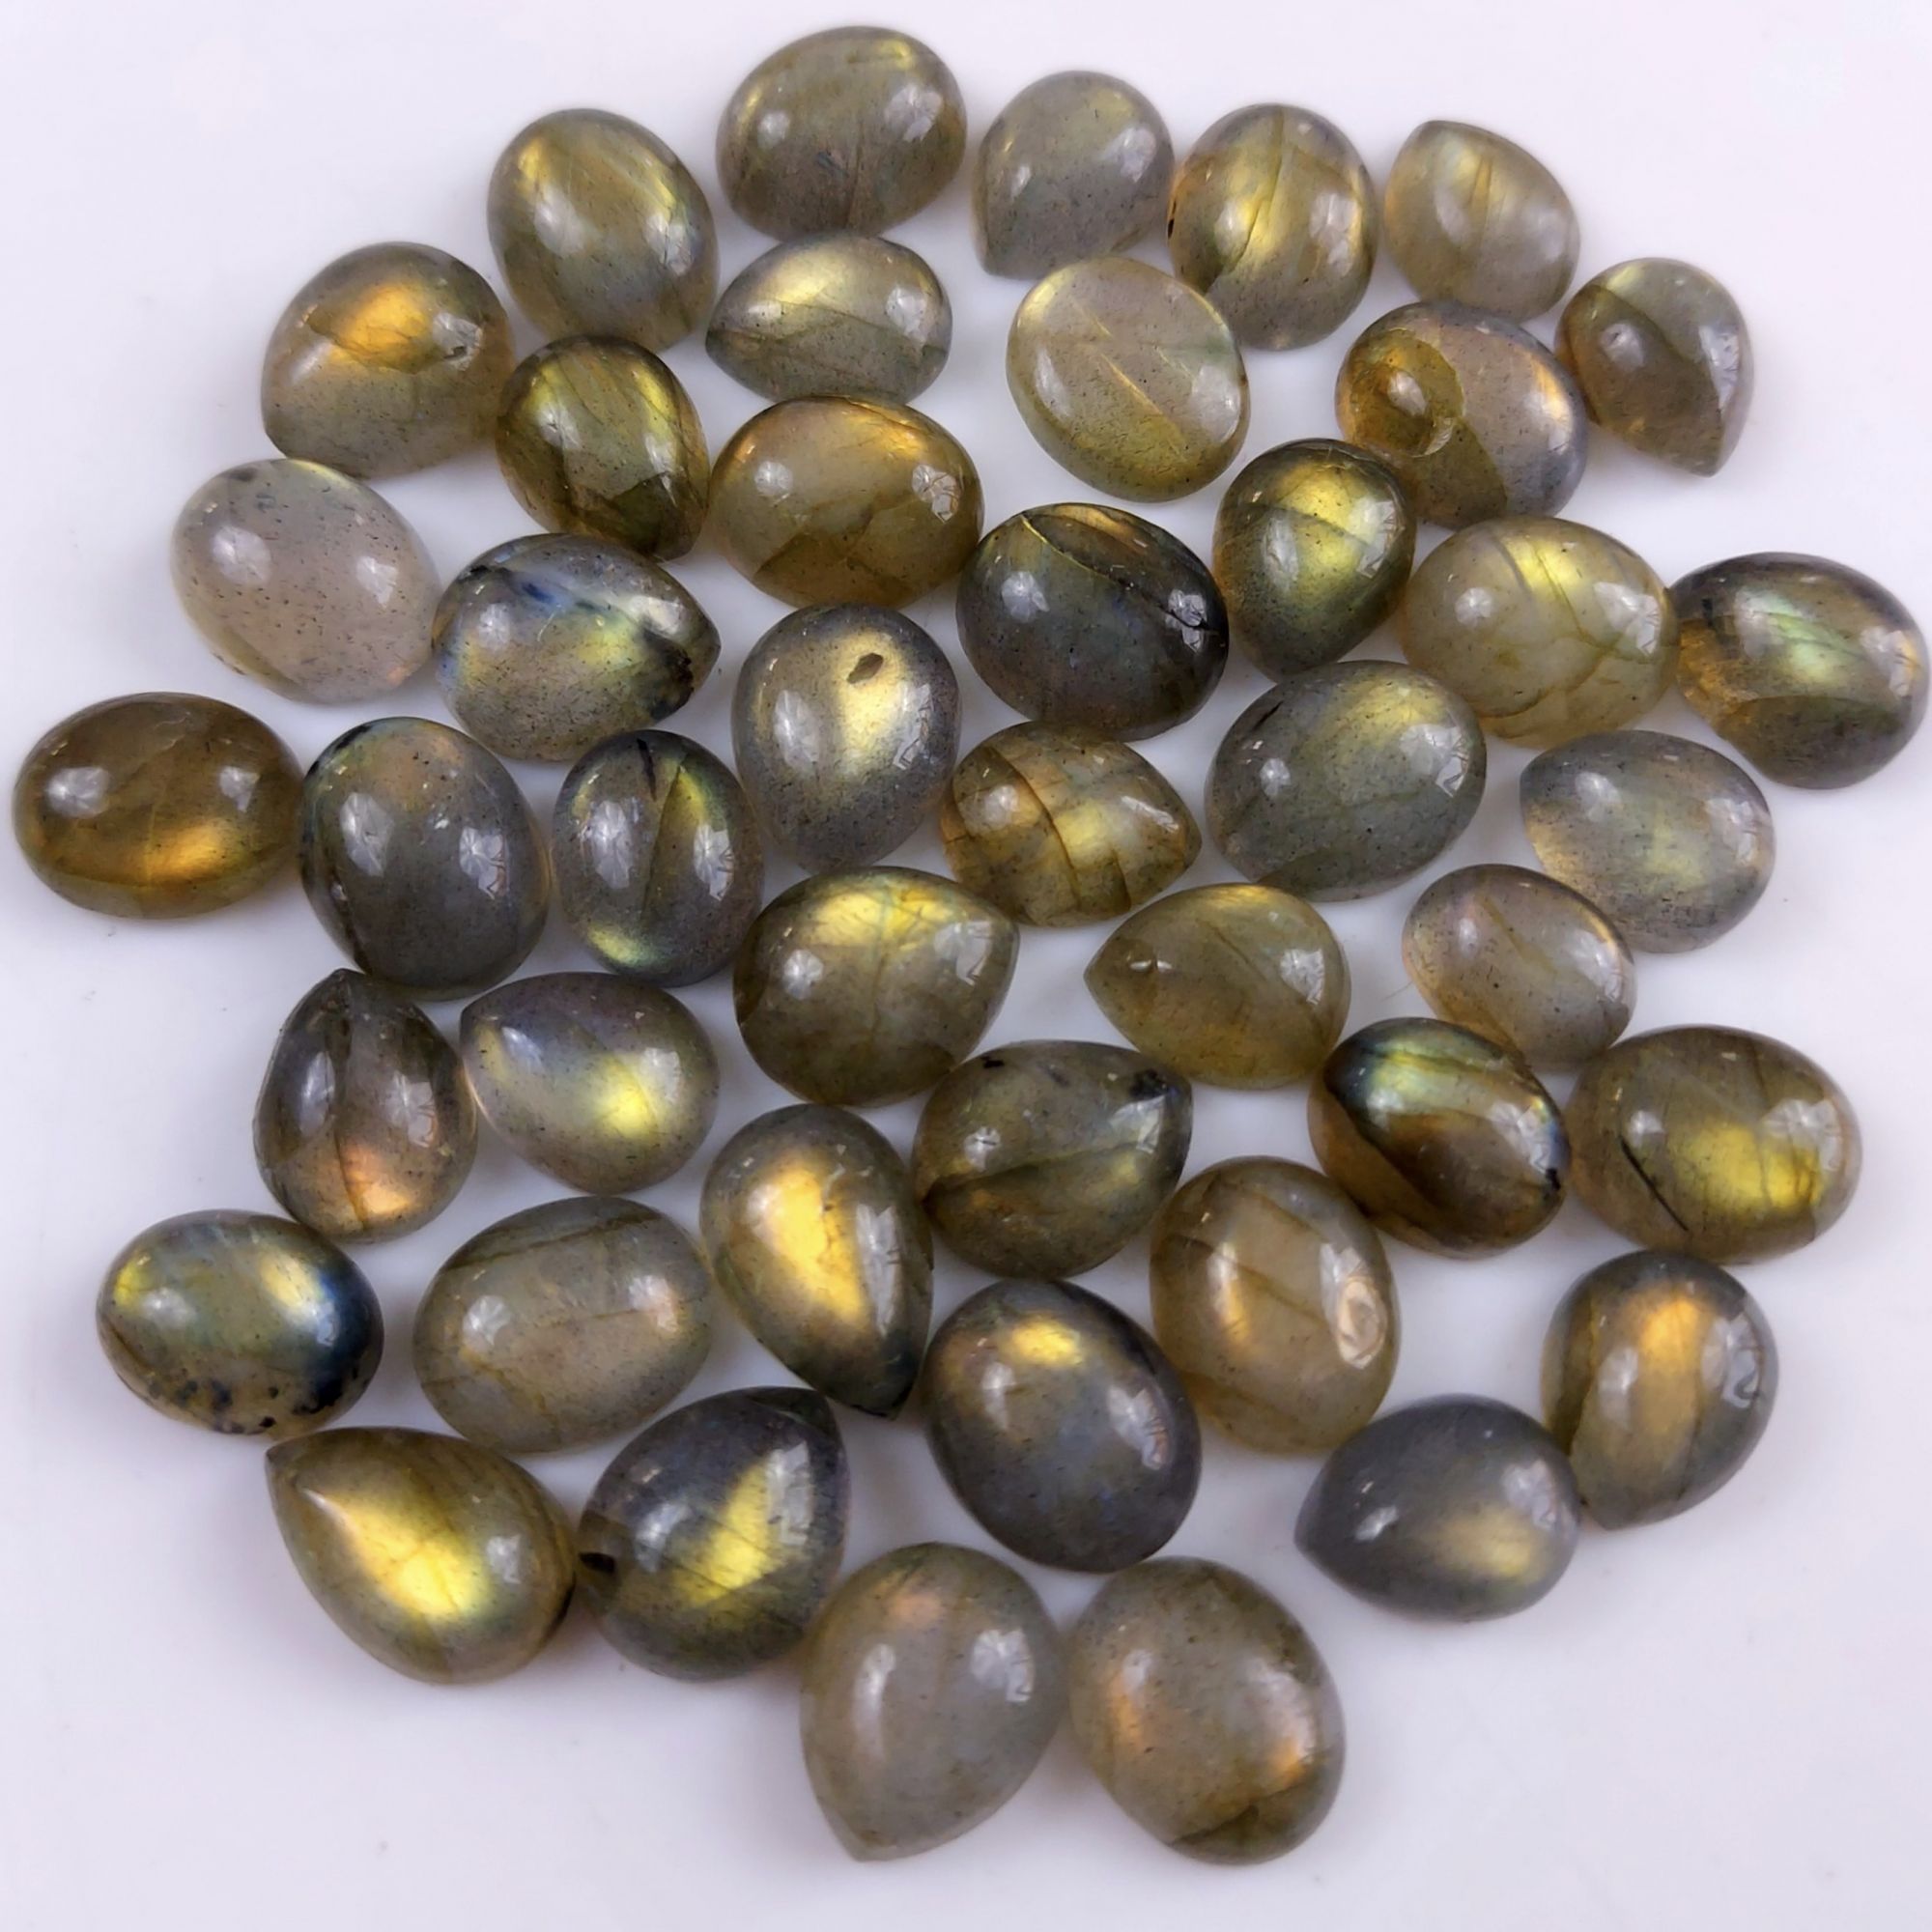 44 Pcs159Cts Natural Multifire Labradorite Loose Cabochon Gemstone Lot for Jewelry Making  9x7 7x5mm#1051